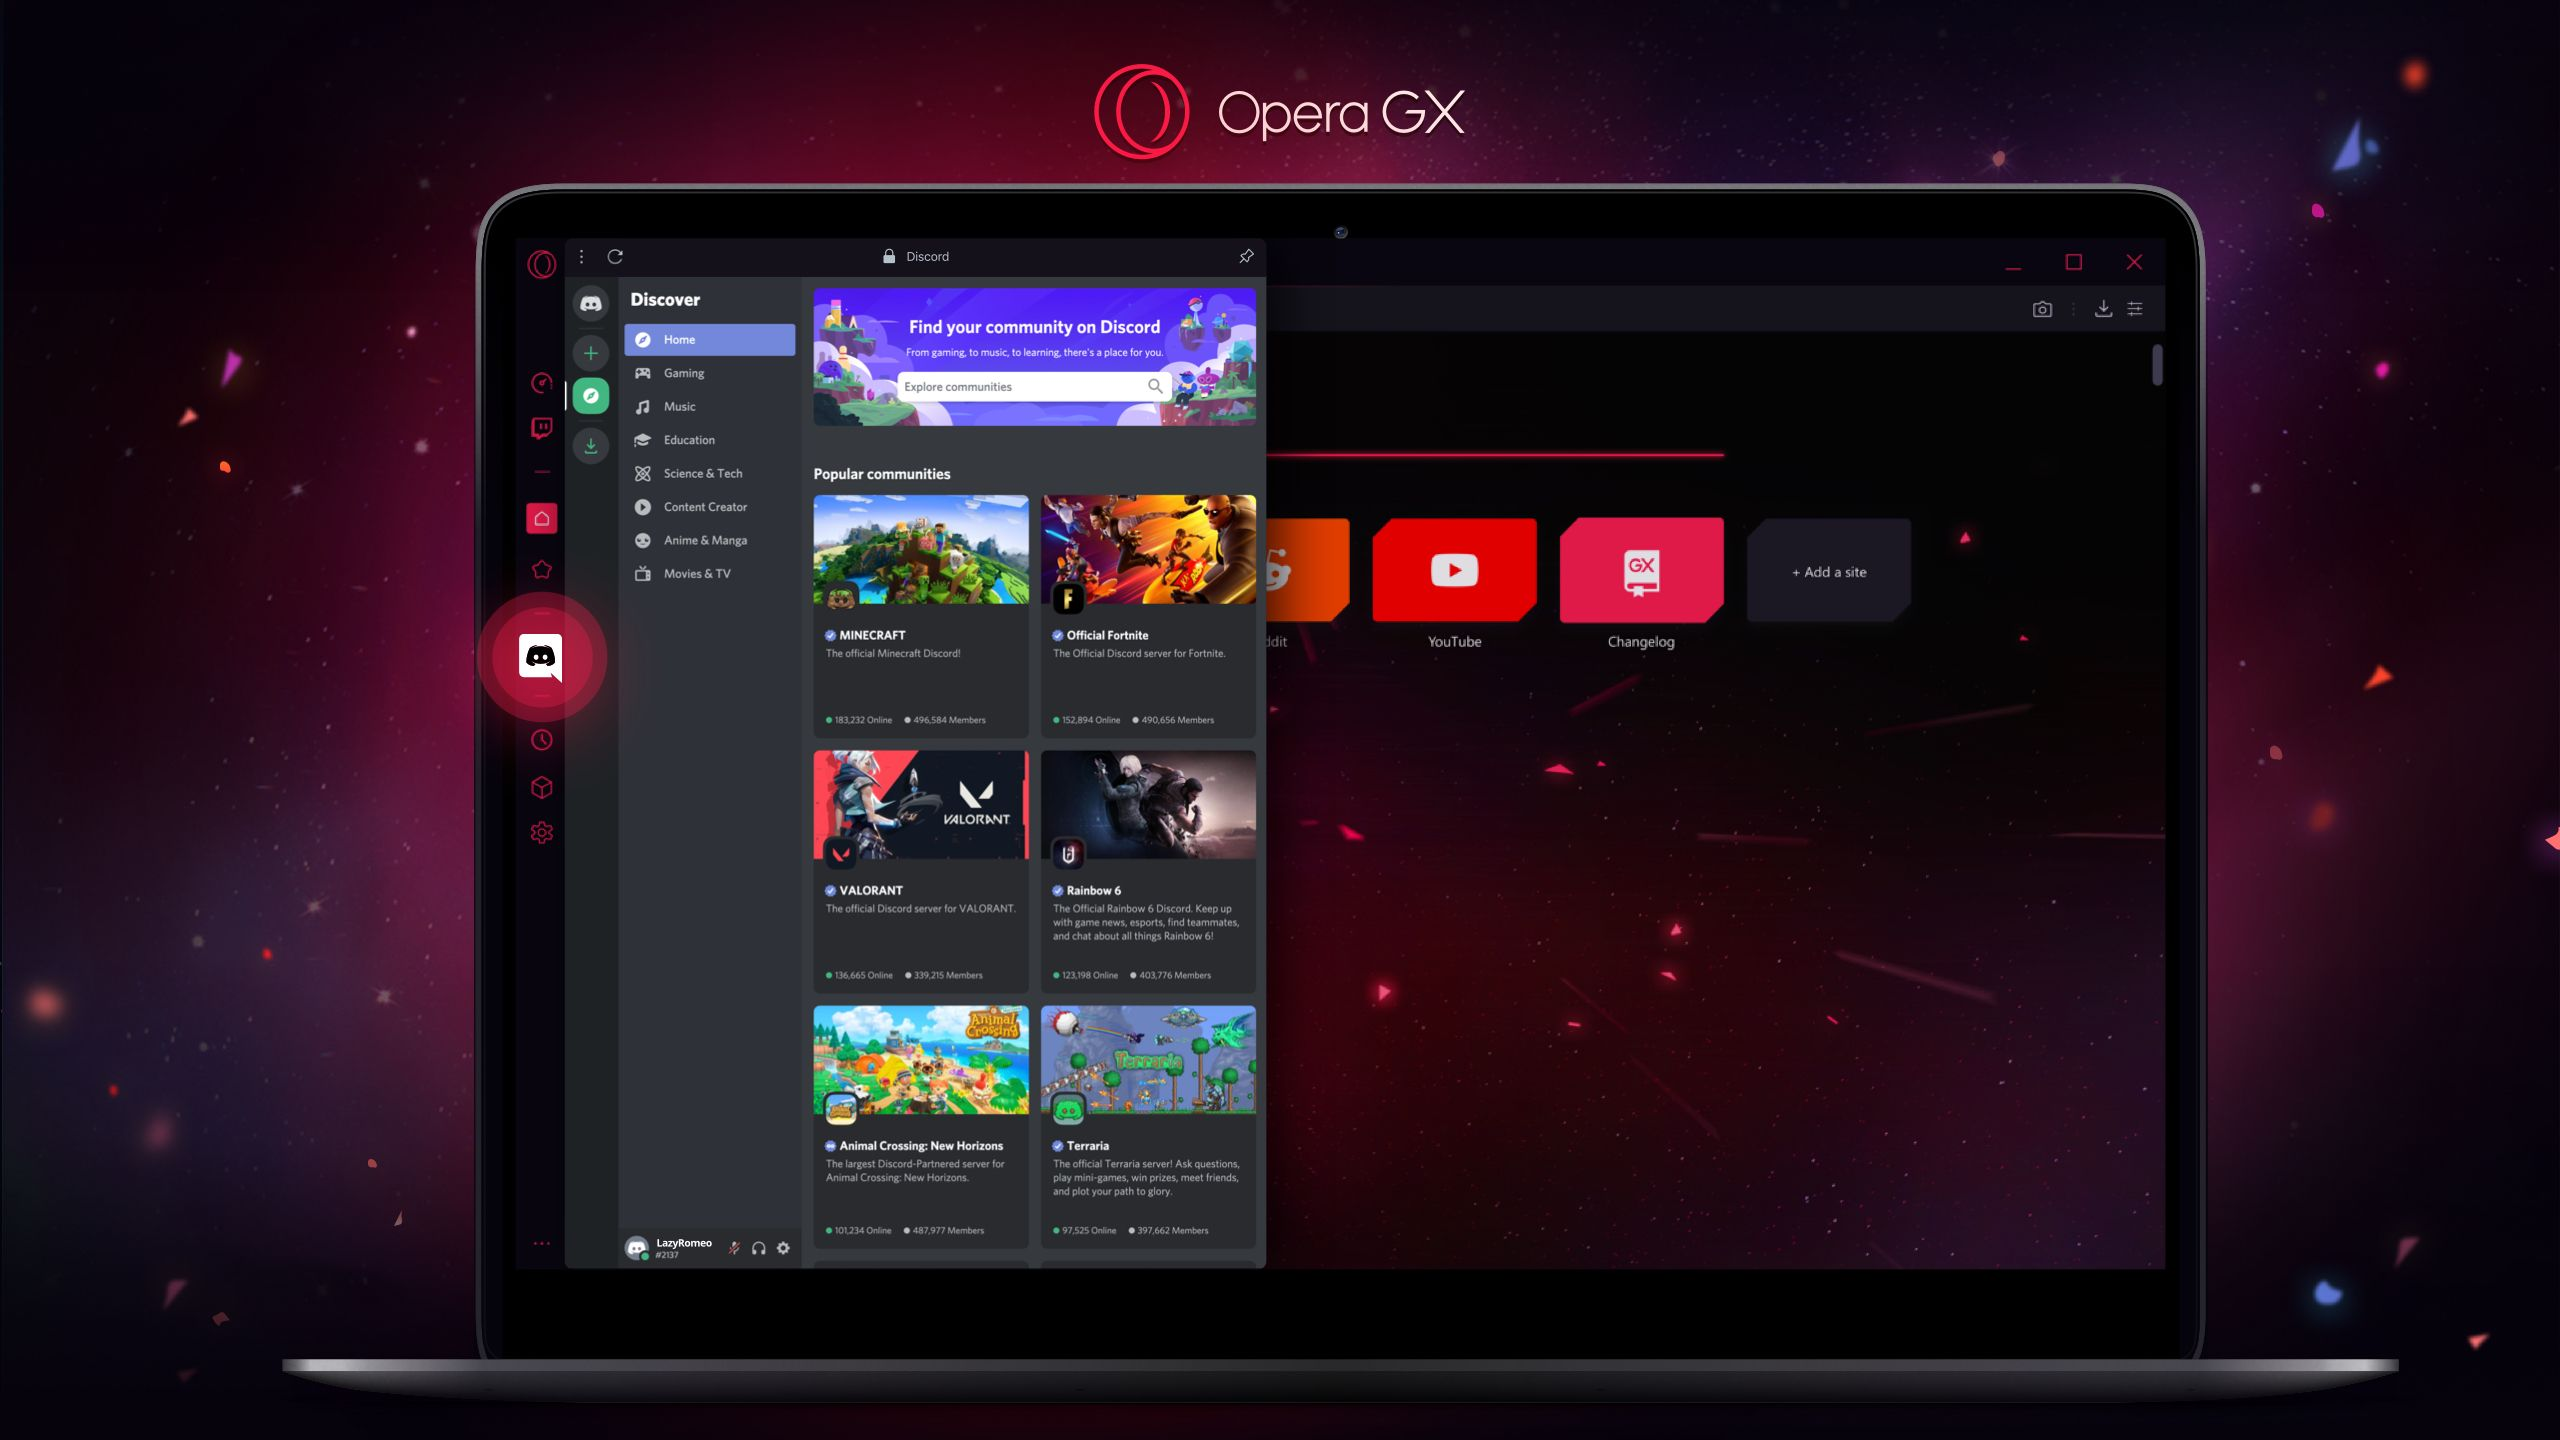 download the new Opera GX 101.0.4843.55